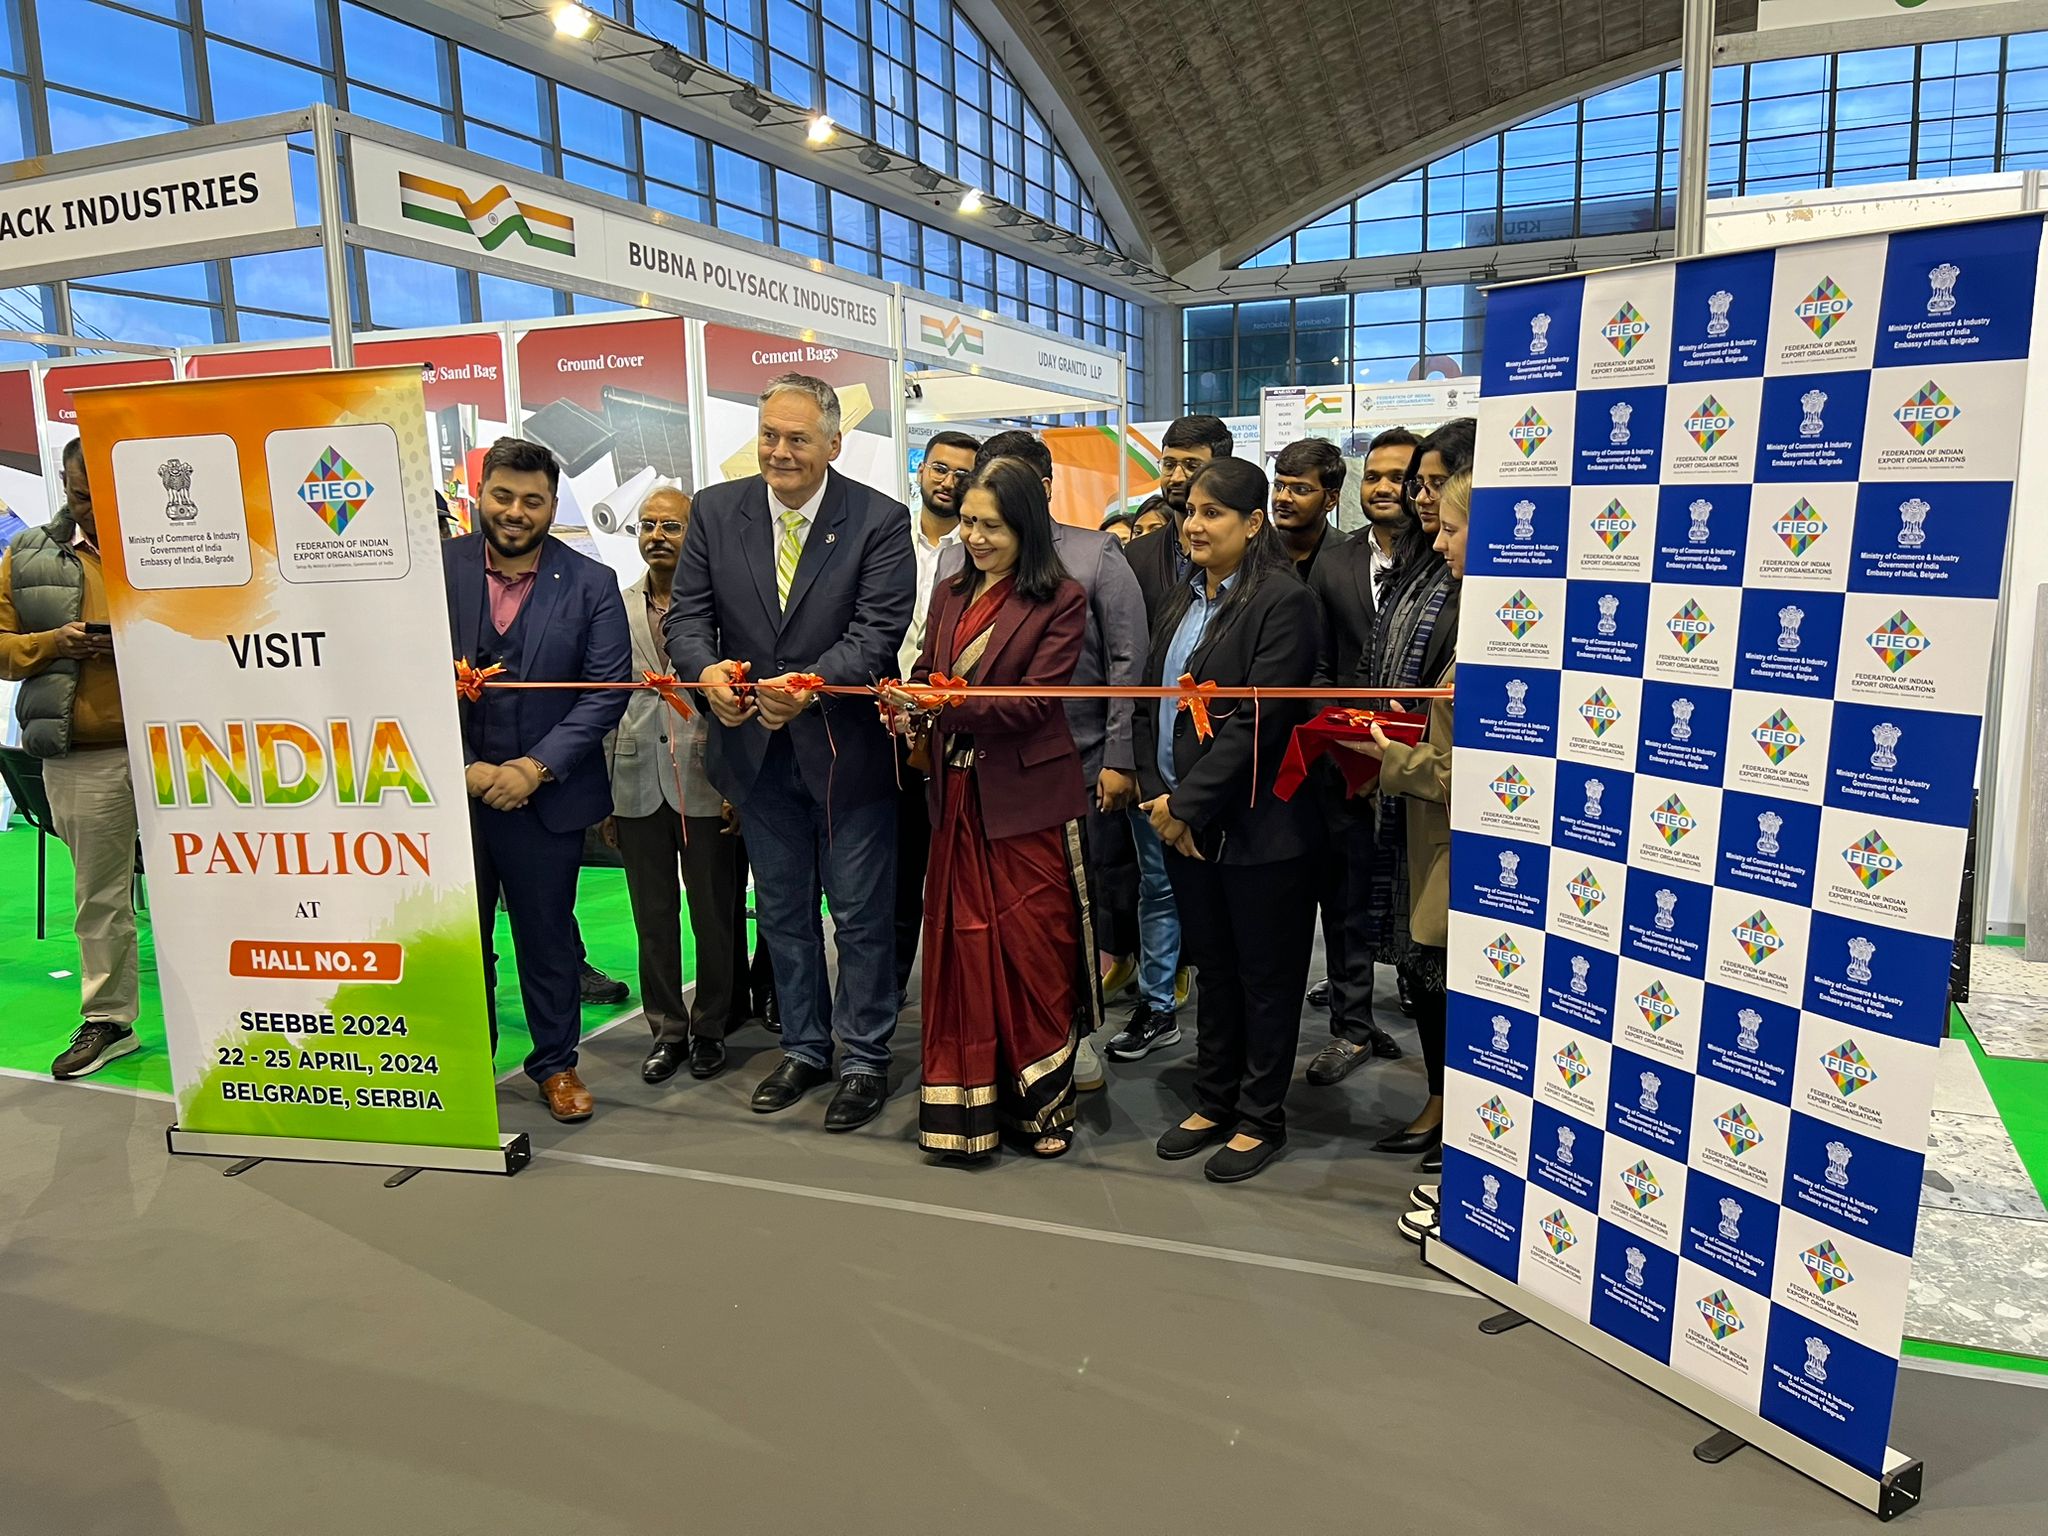 Ambassador Ms. Shubhdarshini Tripathi inaugurated the India pavilion at the Belgrade Building Expo from 22-25 April 2024 - 22 April 2024